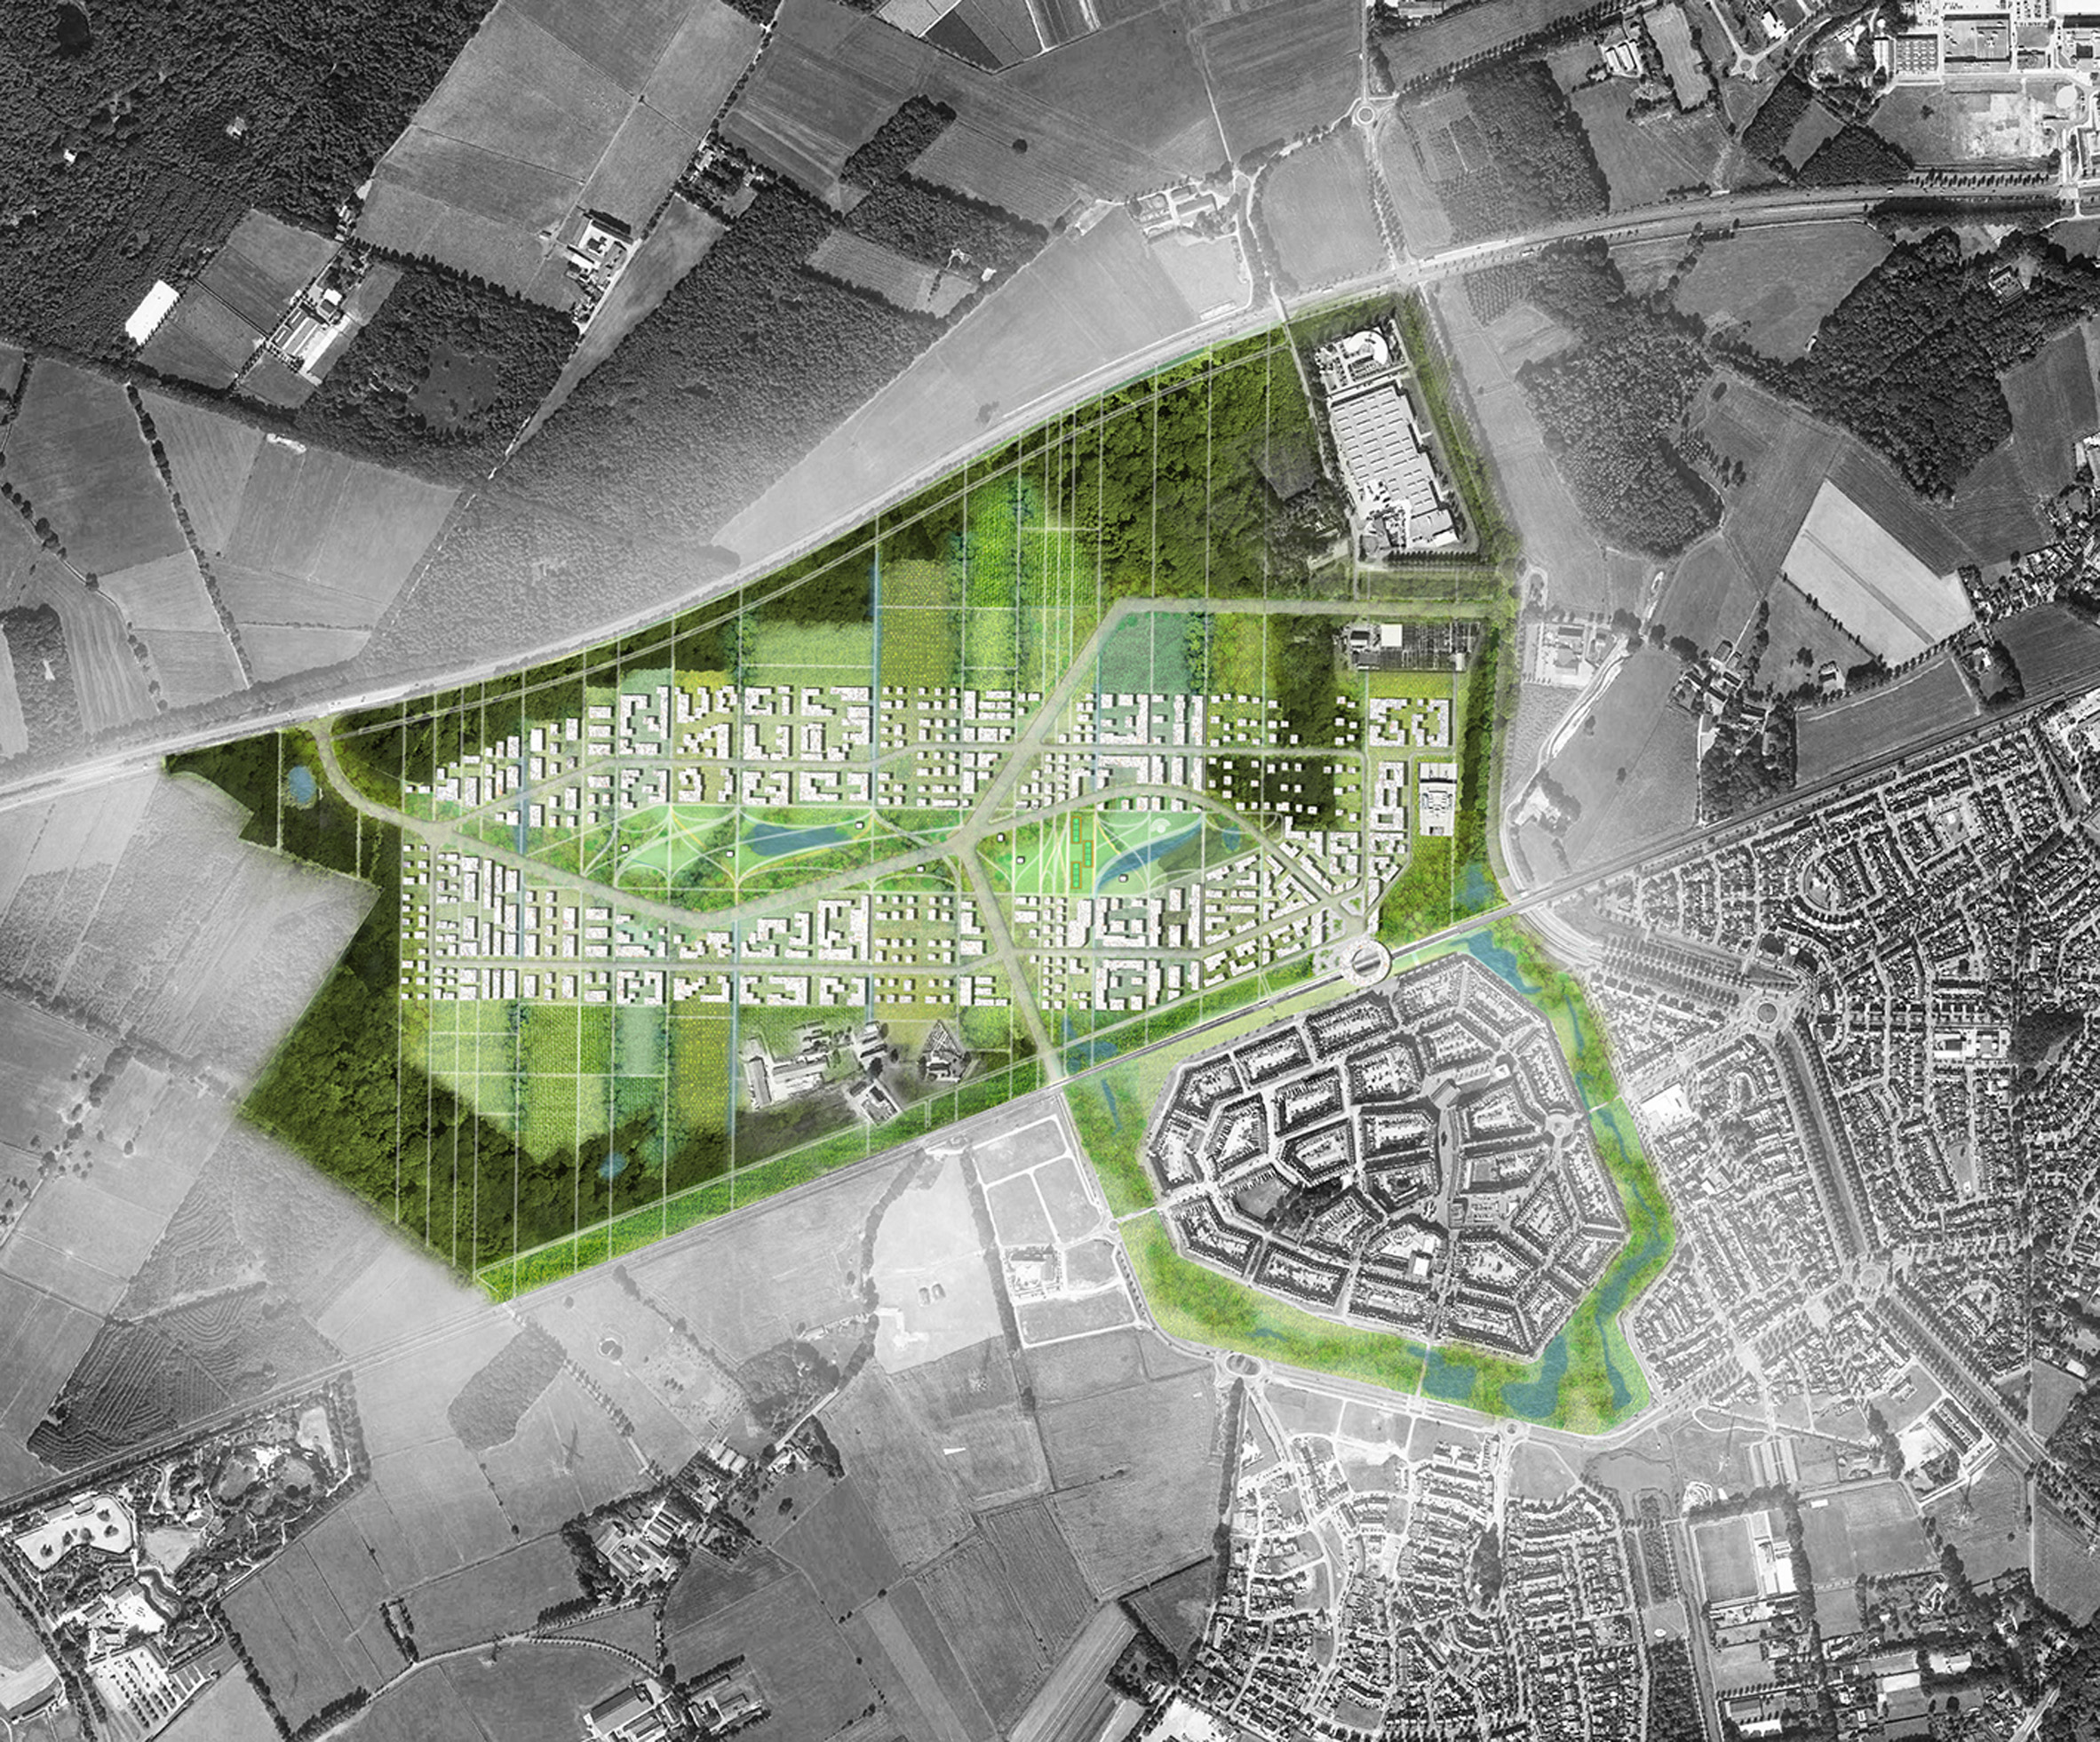 Brainport Smart District masterplan by UNStudio for Netherlands neighbourhood